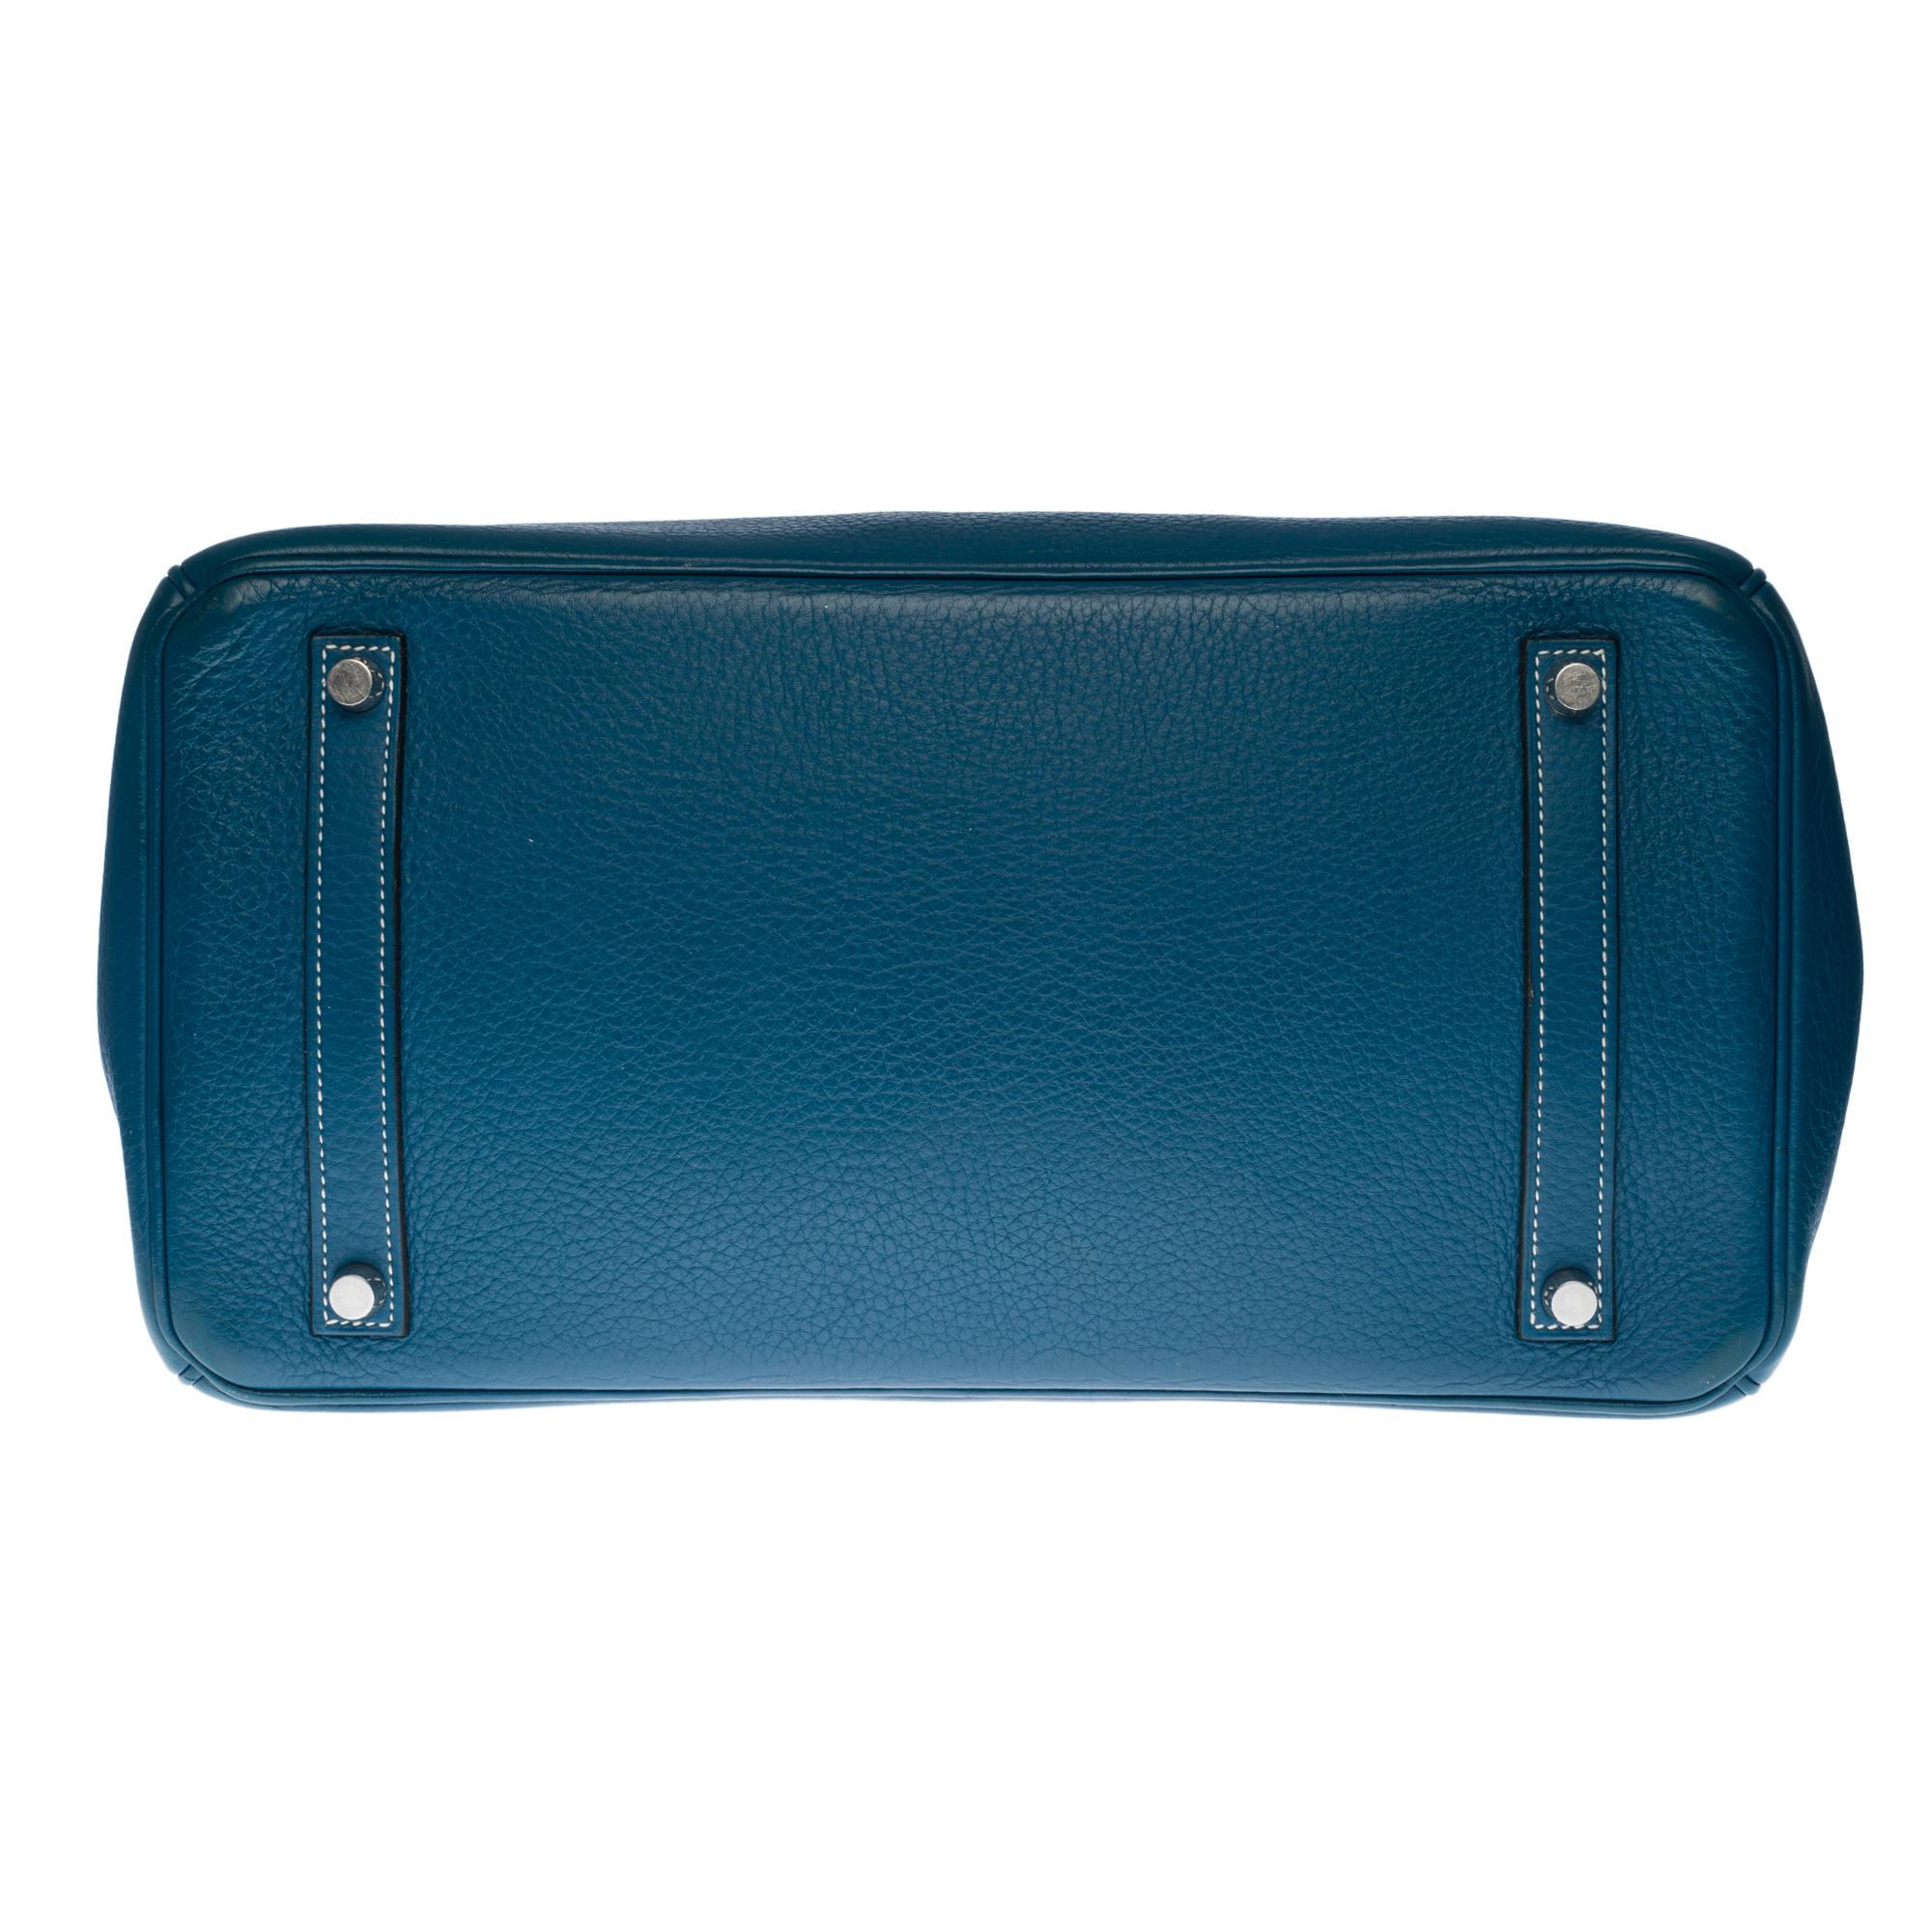 Stunning Hermès Birkin 35 handbag in Blue Thalassa Taurillon leather, SHW 4